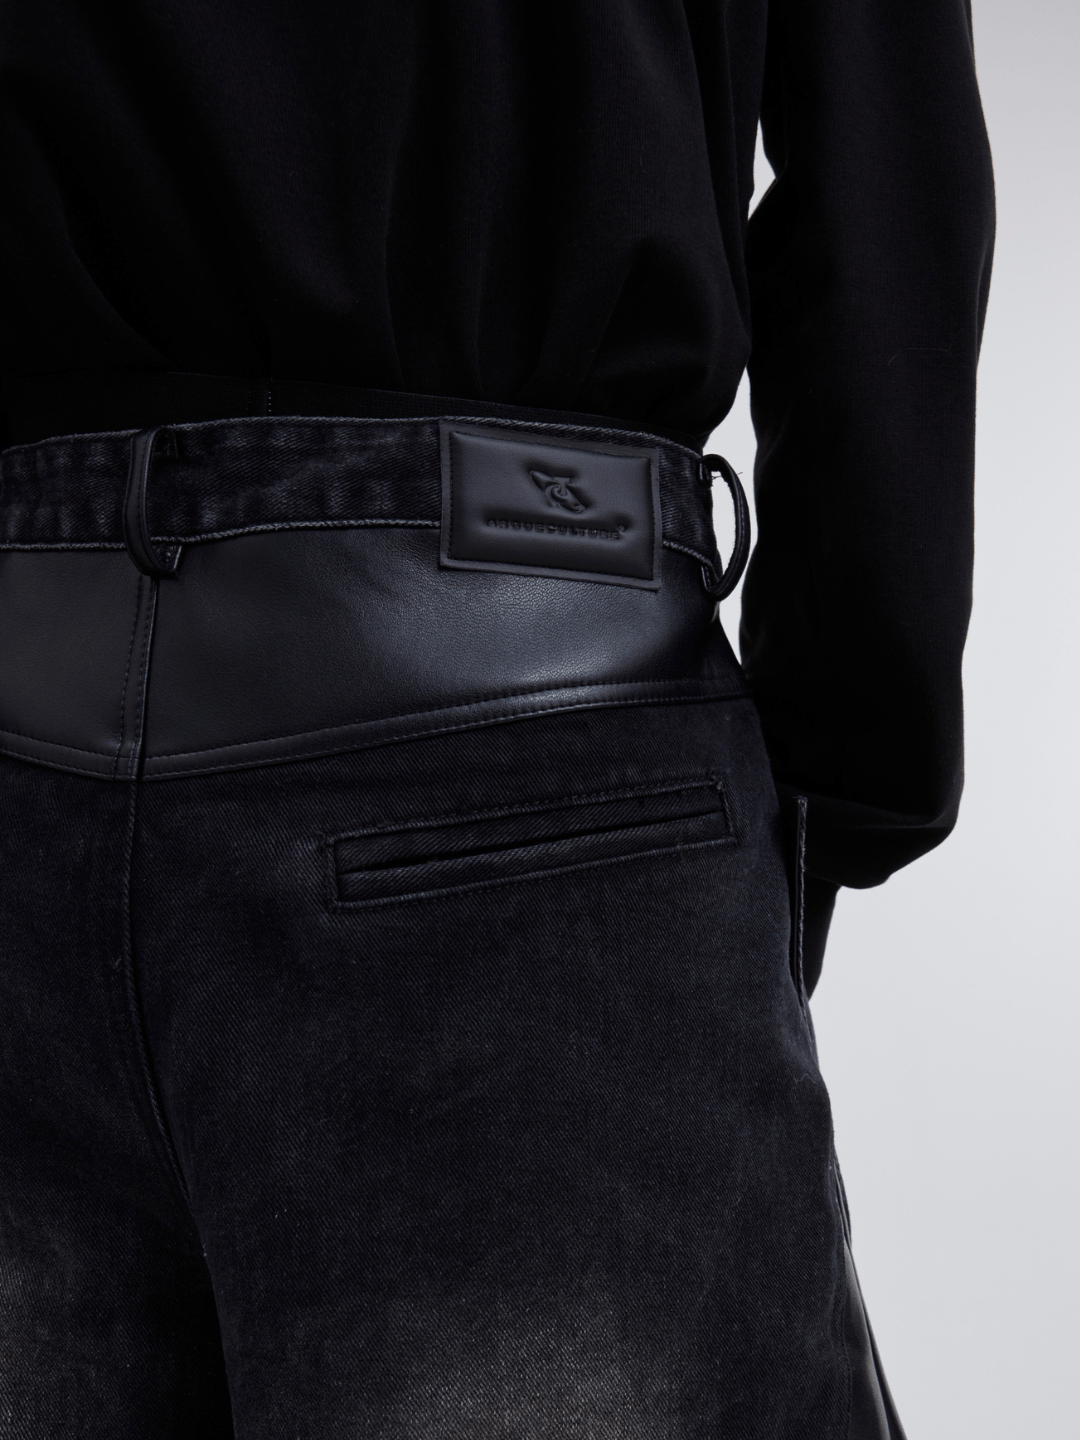 [CulturE] PU leather design color-blocked jeans na840